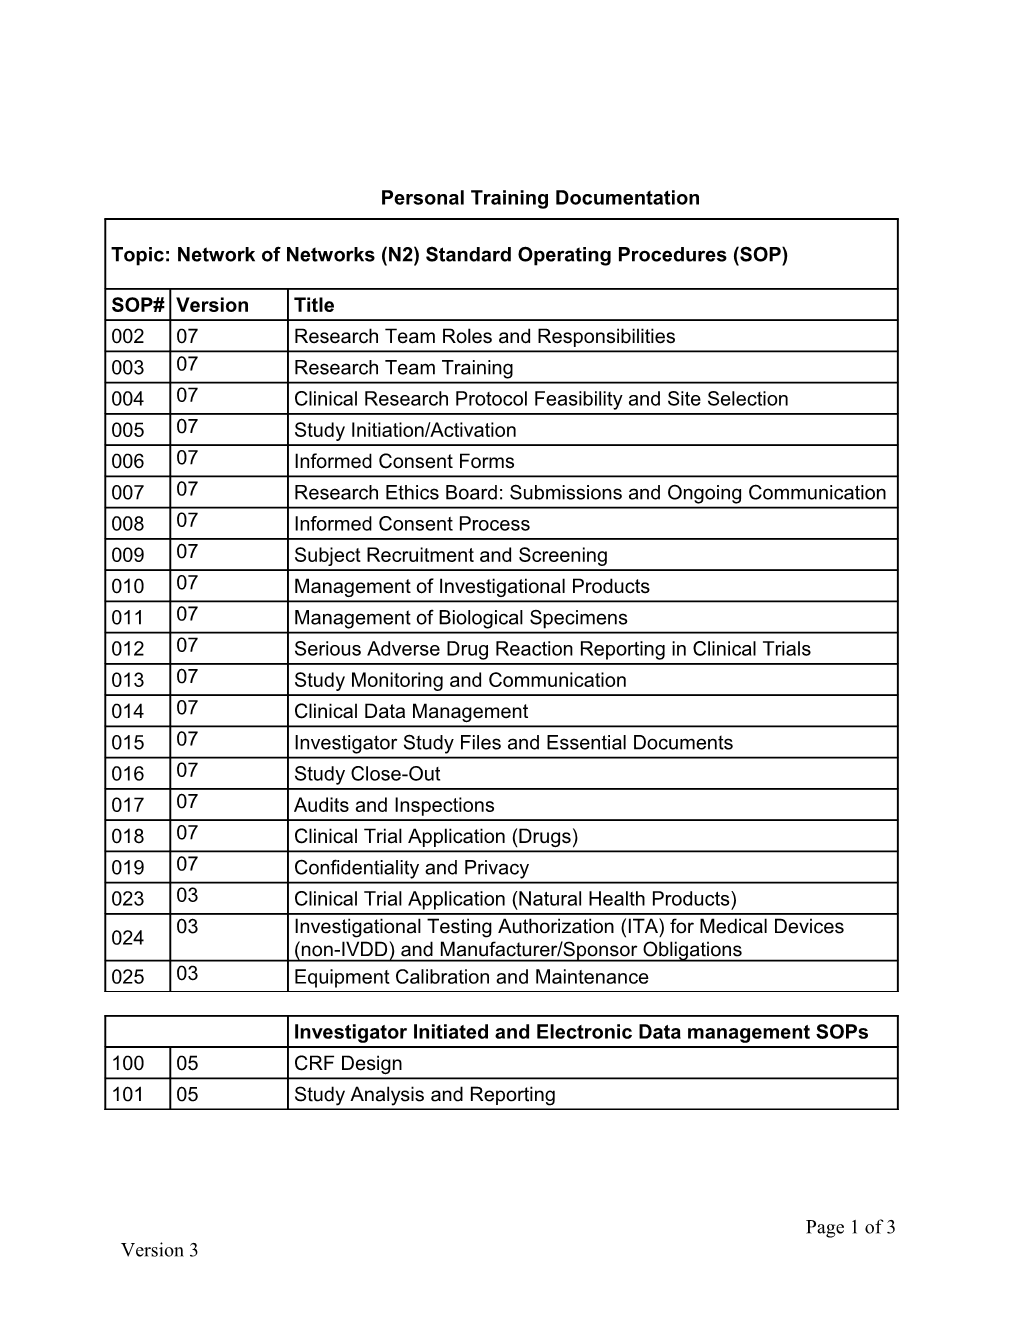 PHARMACIST: Training Documentation for Clinical Trials